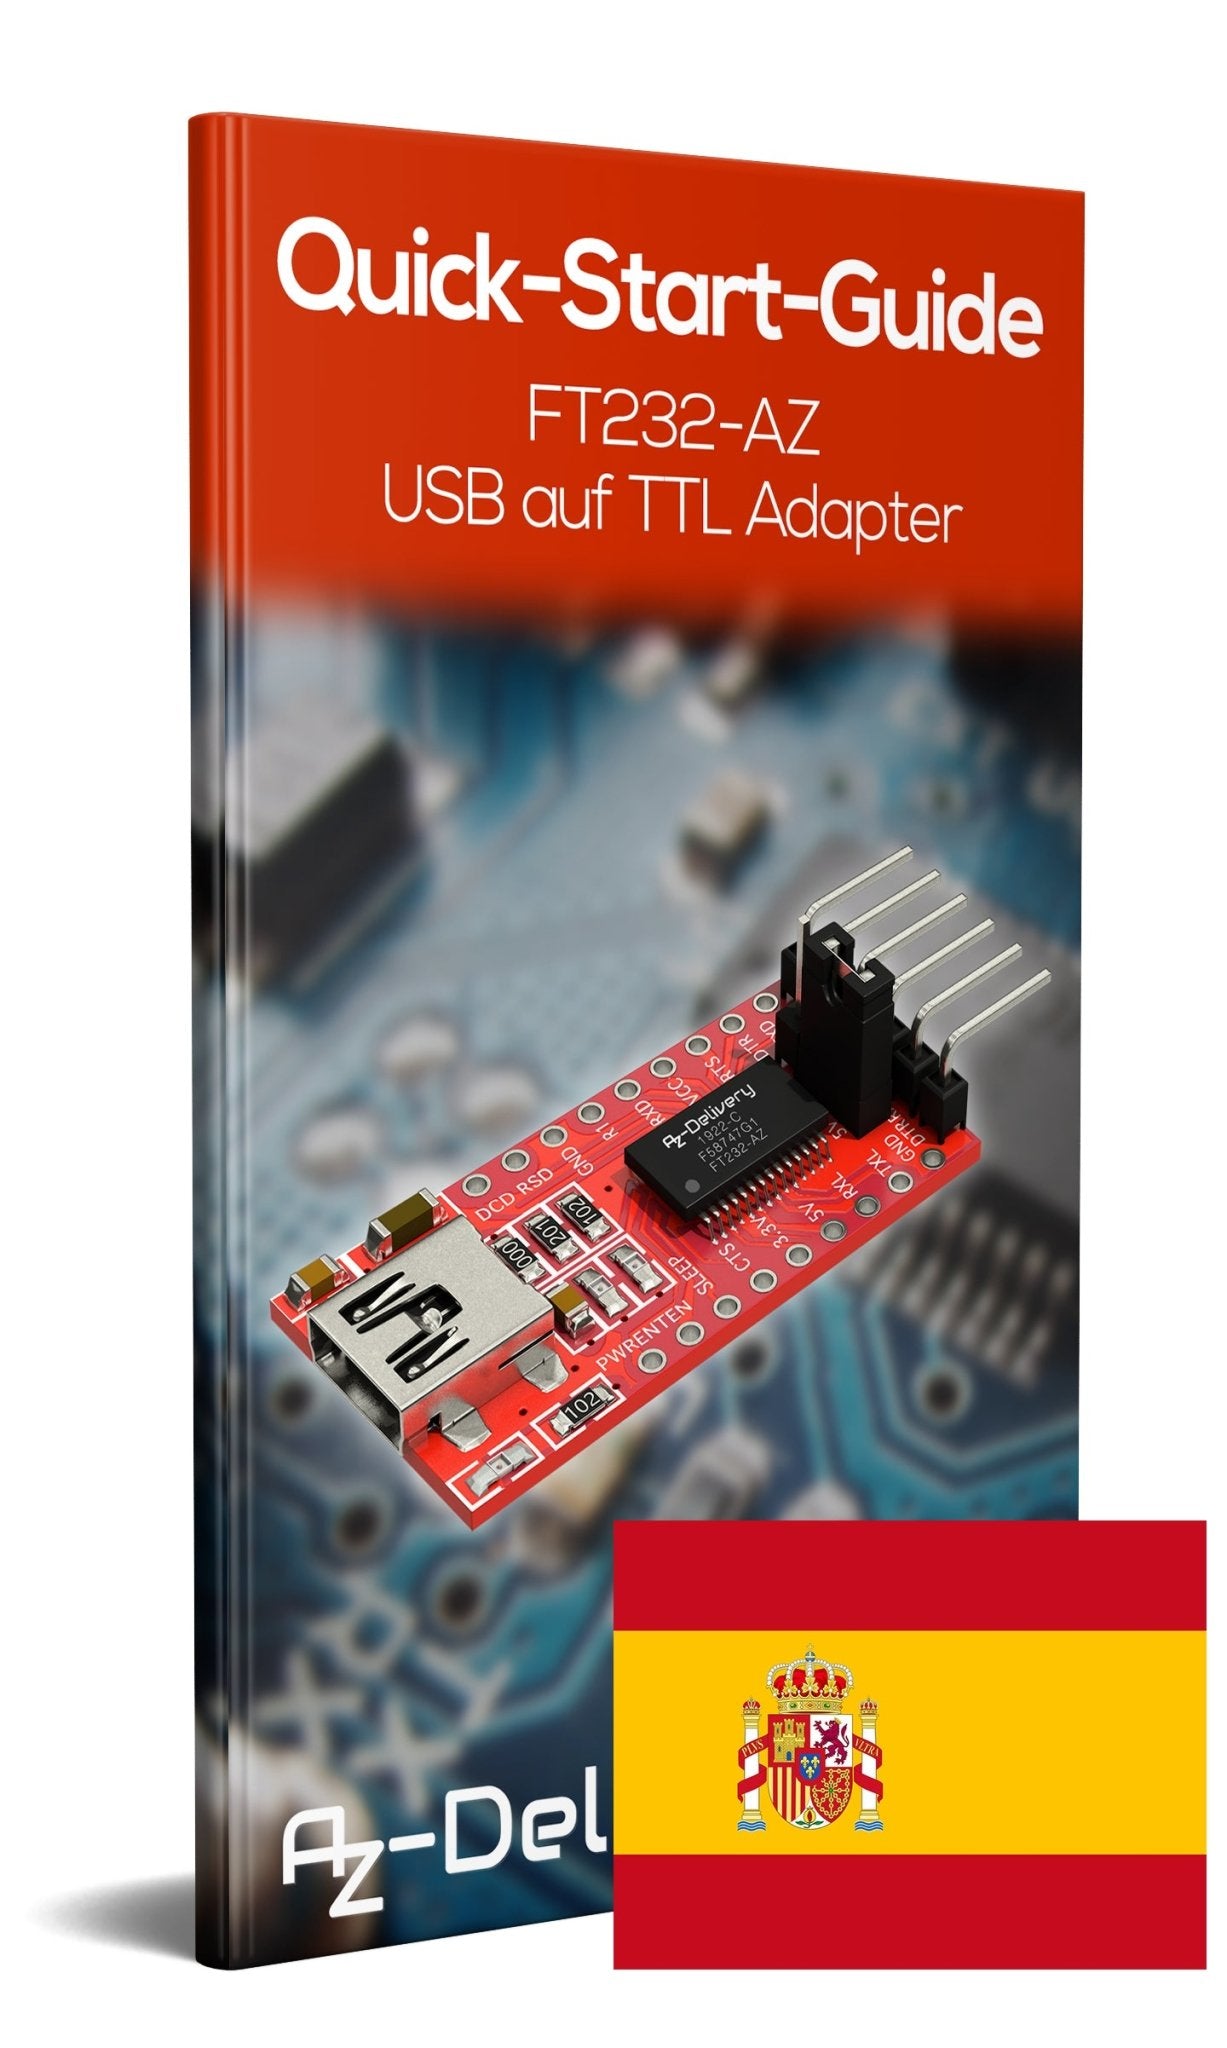 FT232-AZ USB zu TTL Serial Adapter für 3,3V und 5V - AZ-Delivery